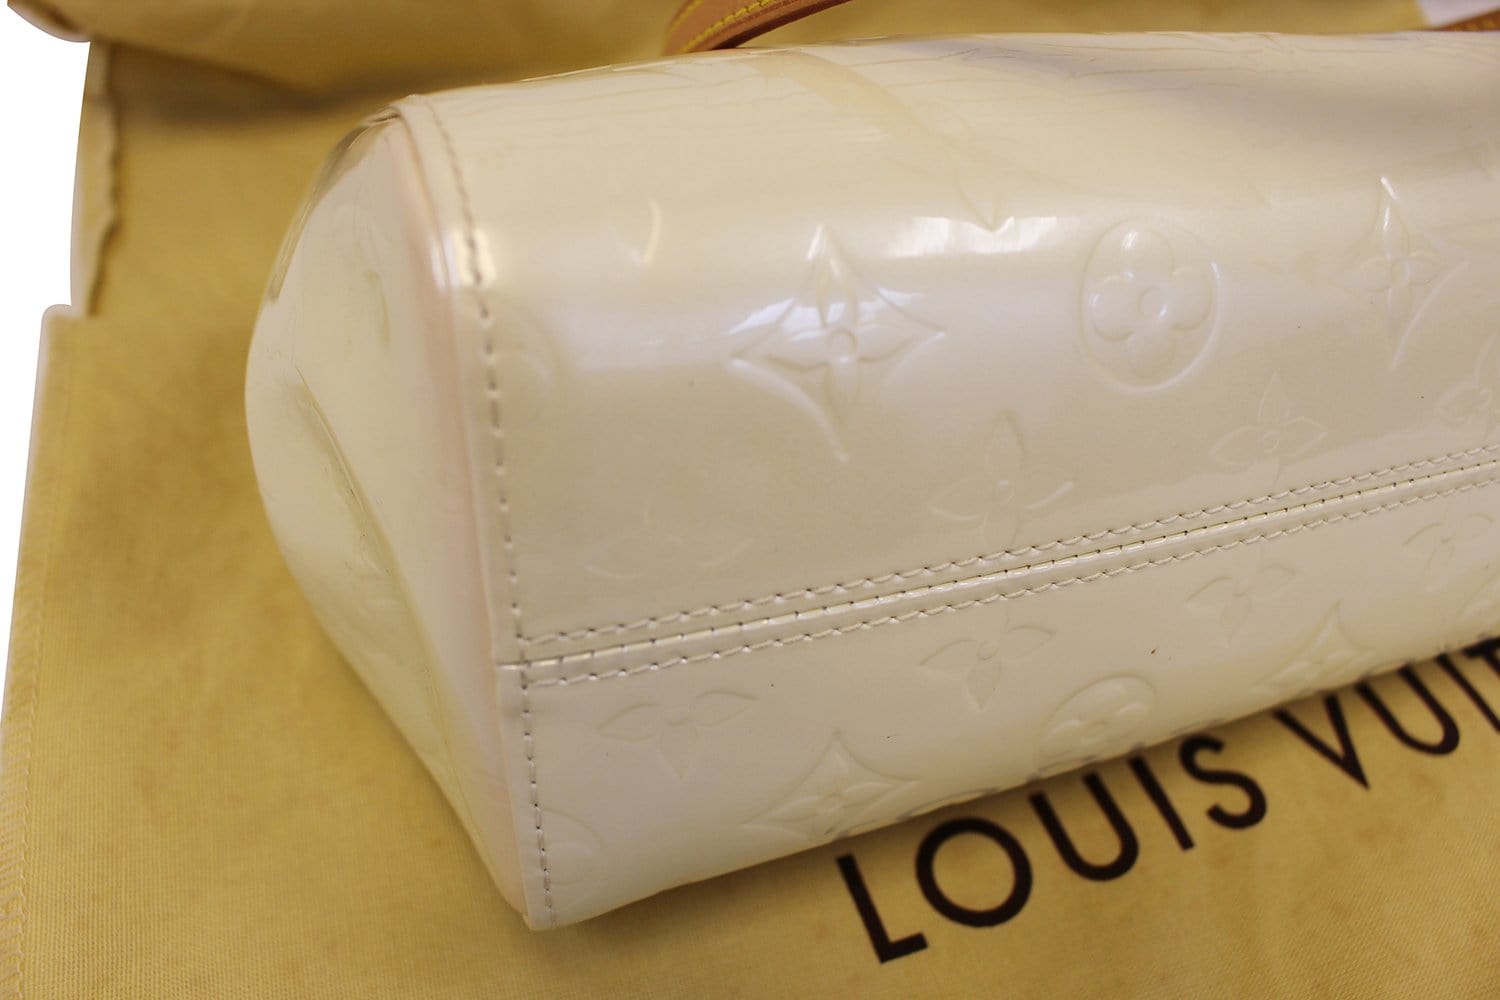 LOUIS VUITTON Burgundy Patent Vernis Roxbury Drive Bag — Garment